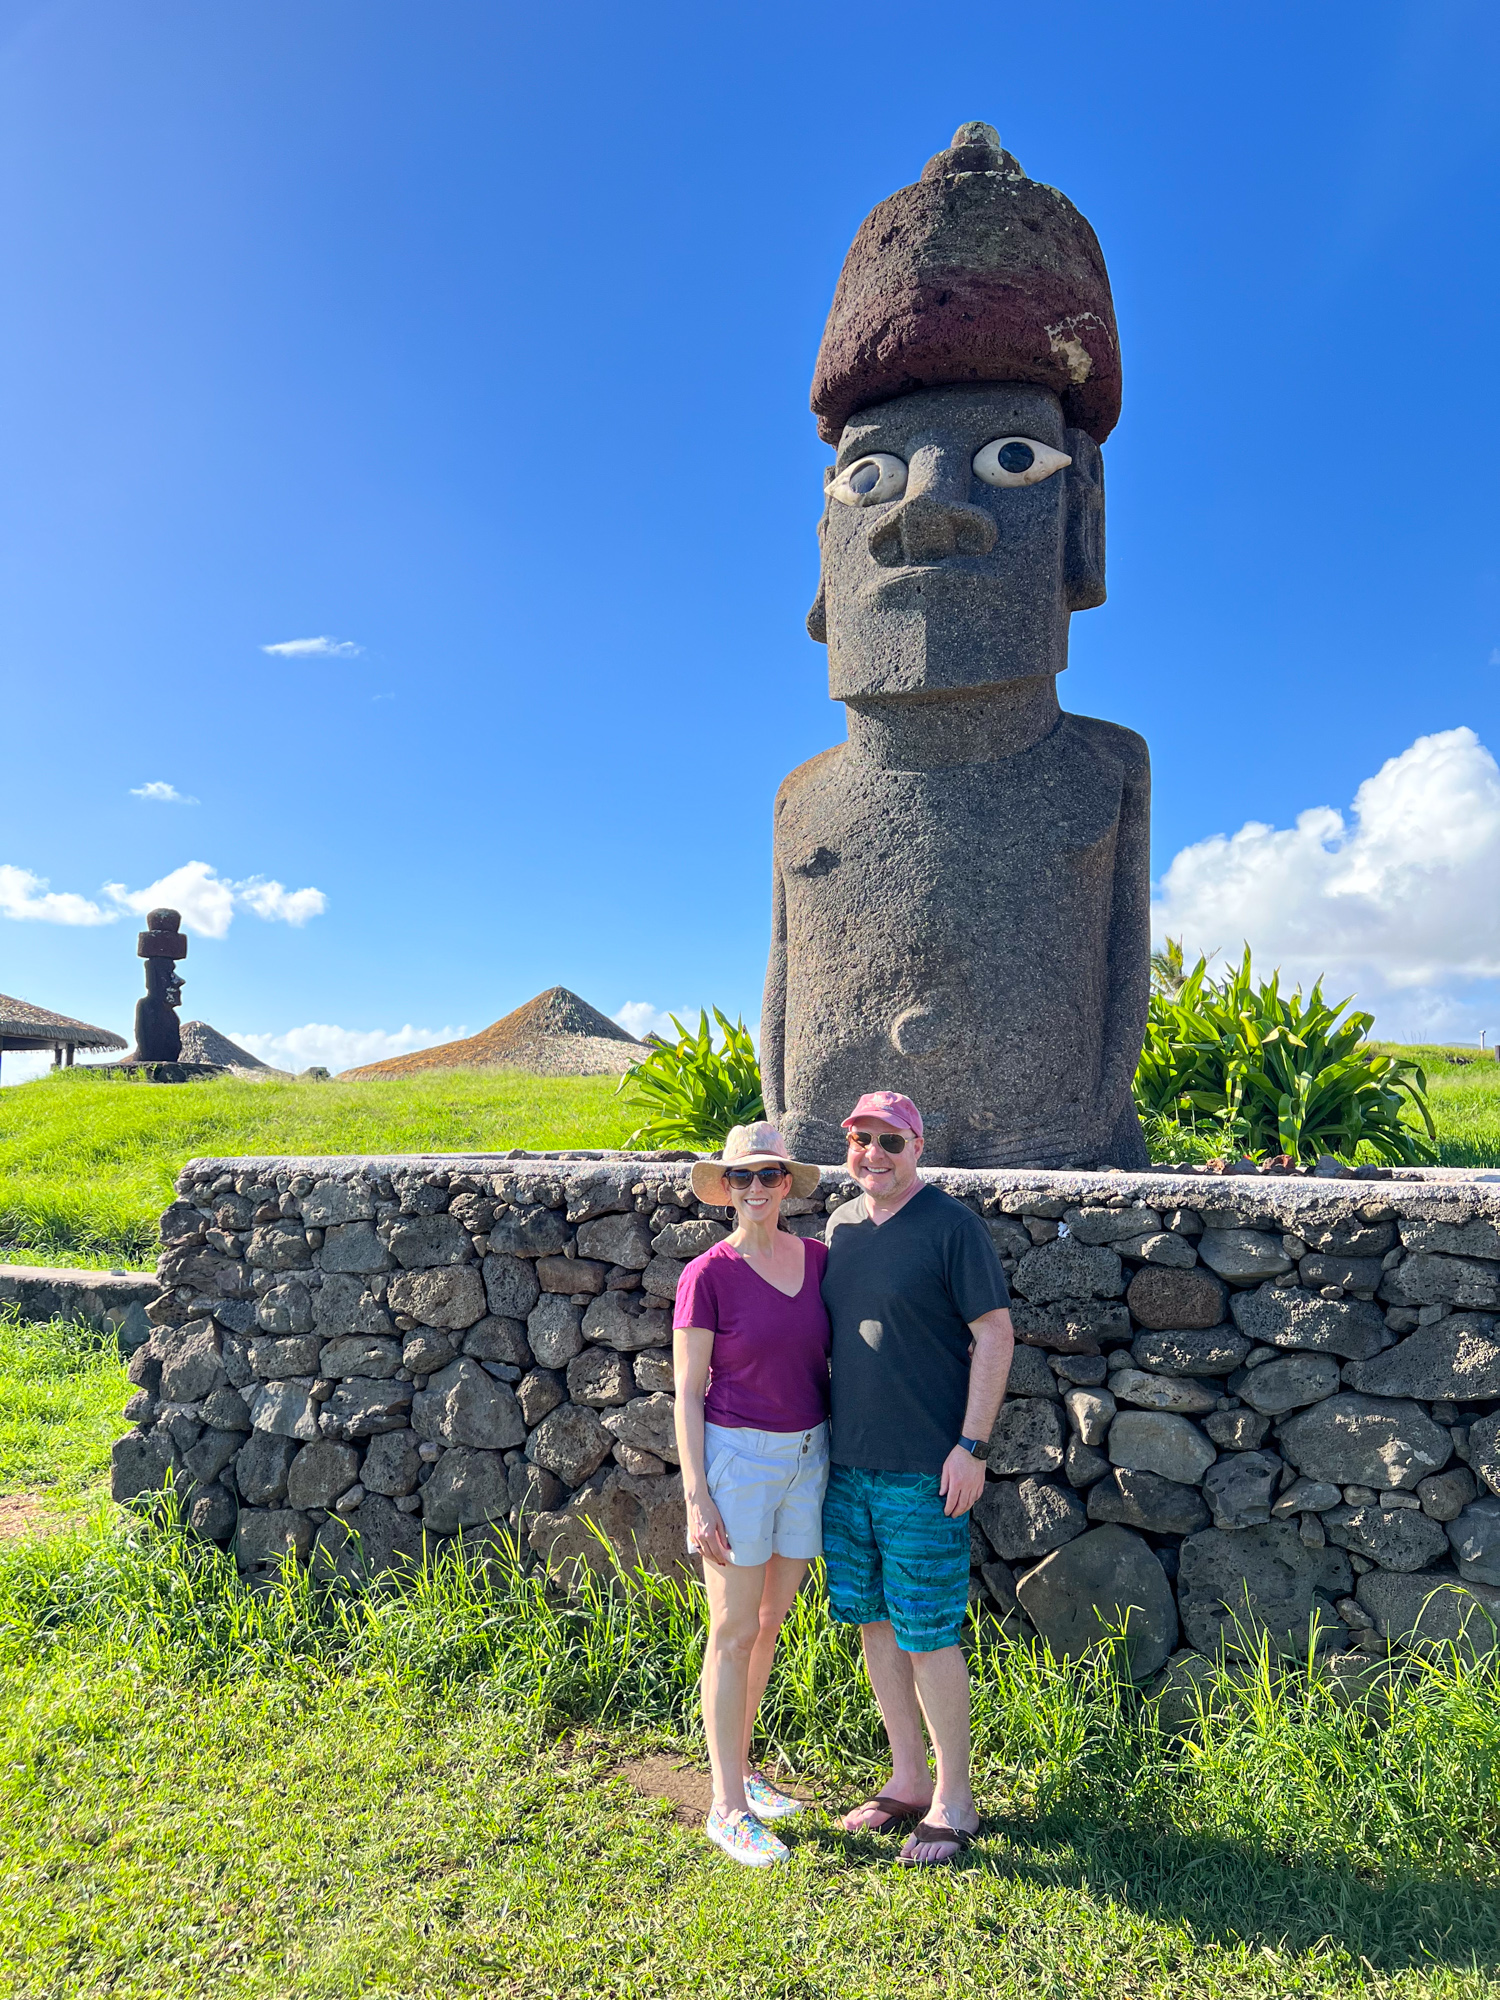 Dave and Kel at the Peace Moai.